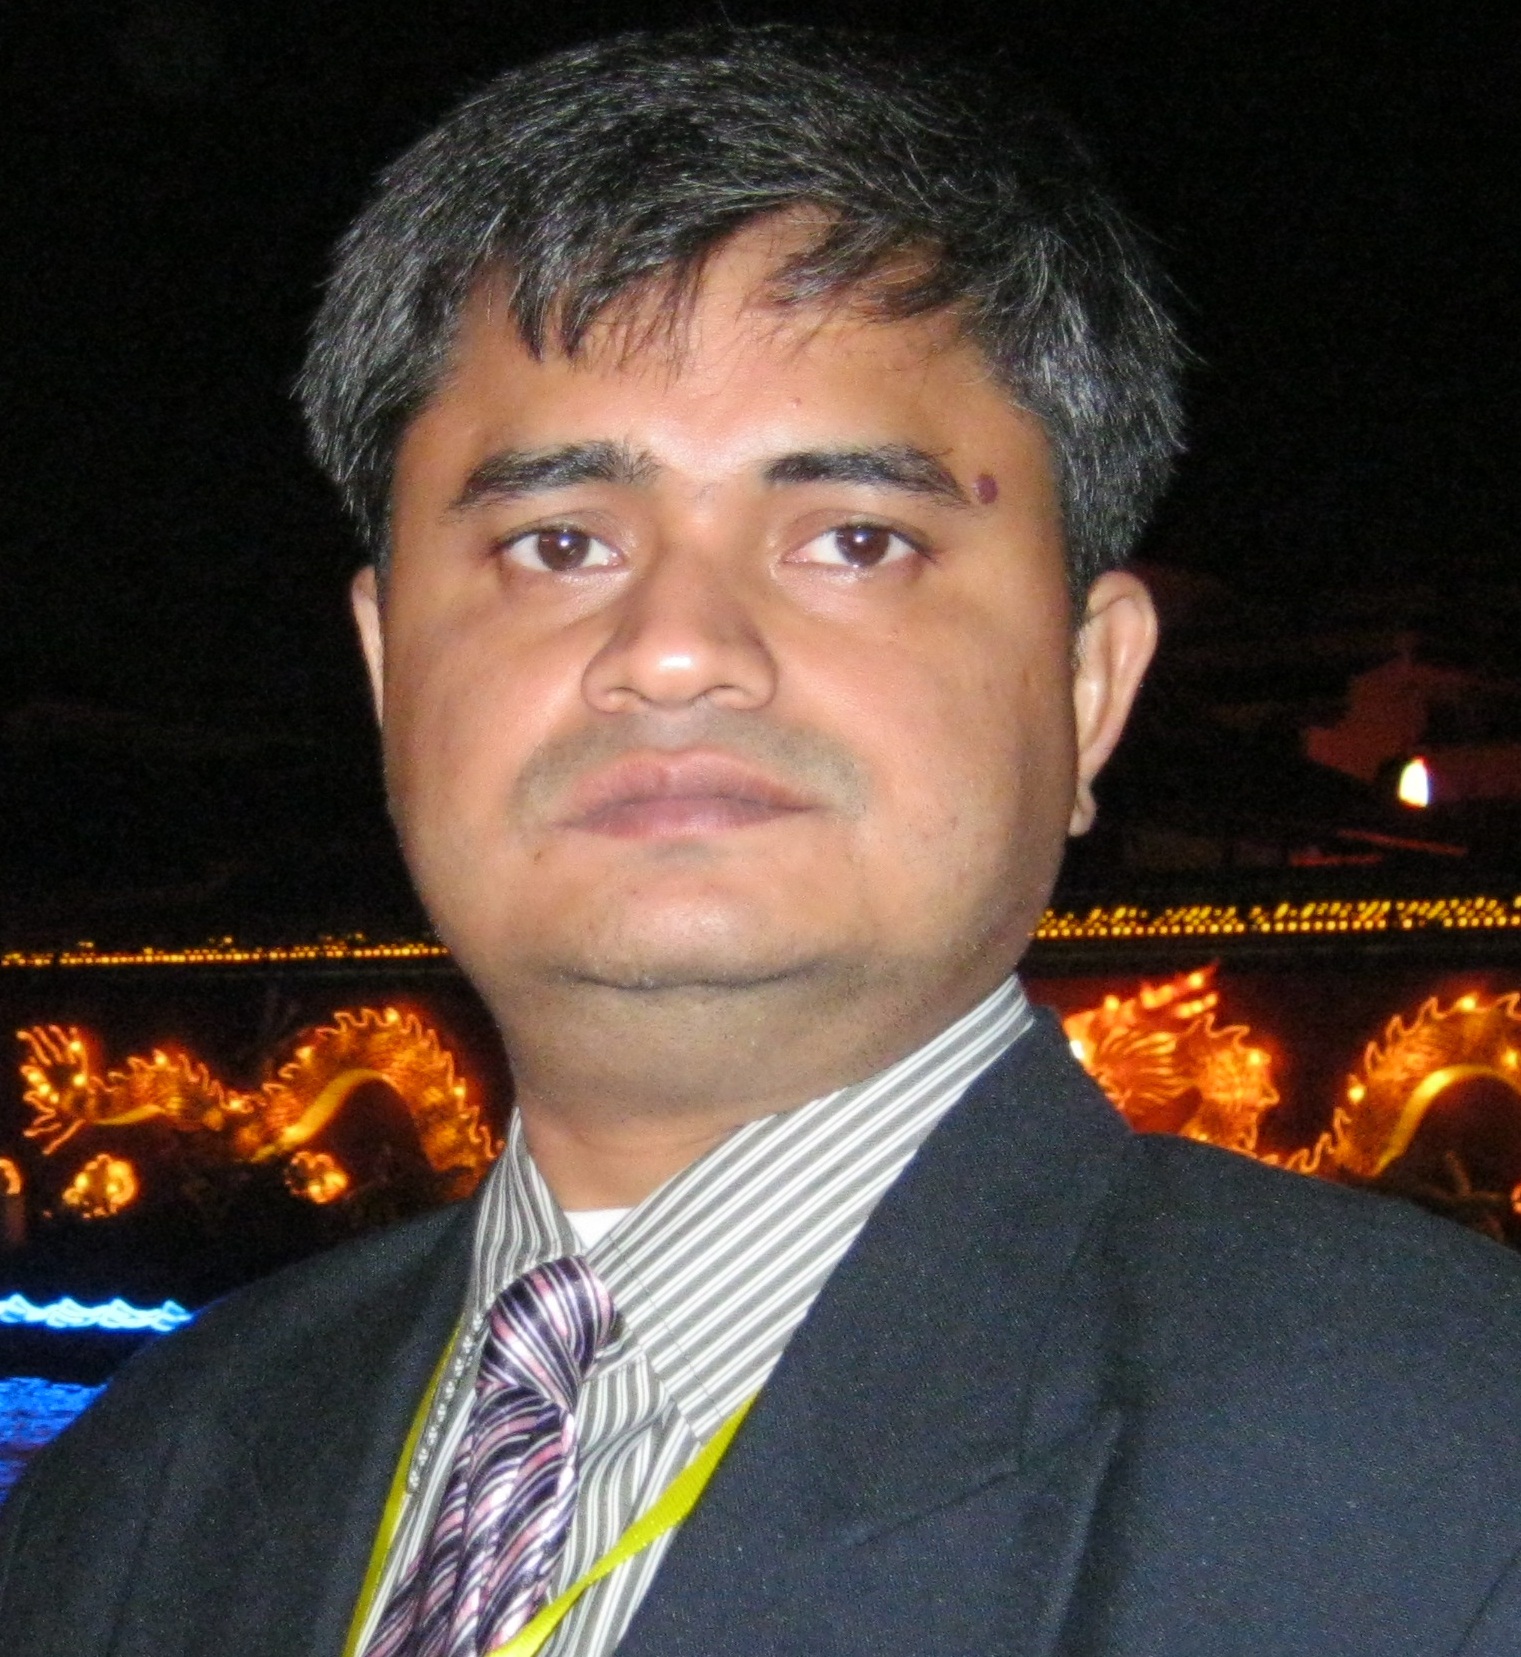 Dr. Sacchidananda Mukherjee, National Institute of Public Finance and Policy (NIPFP), New Delhi, India - Assistant Professor